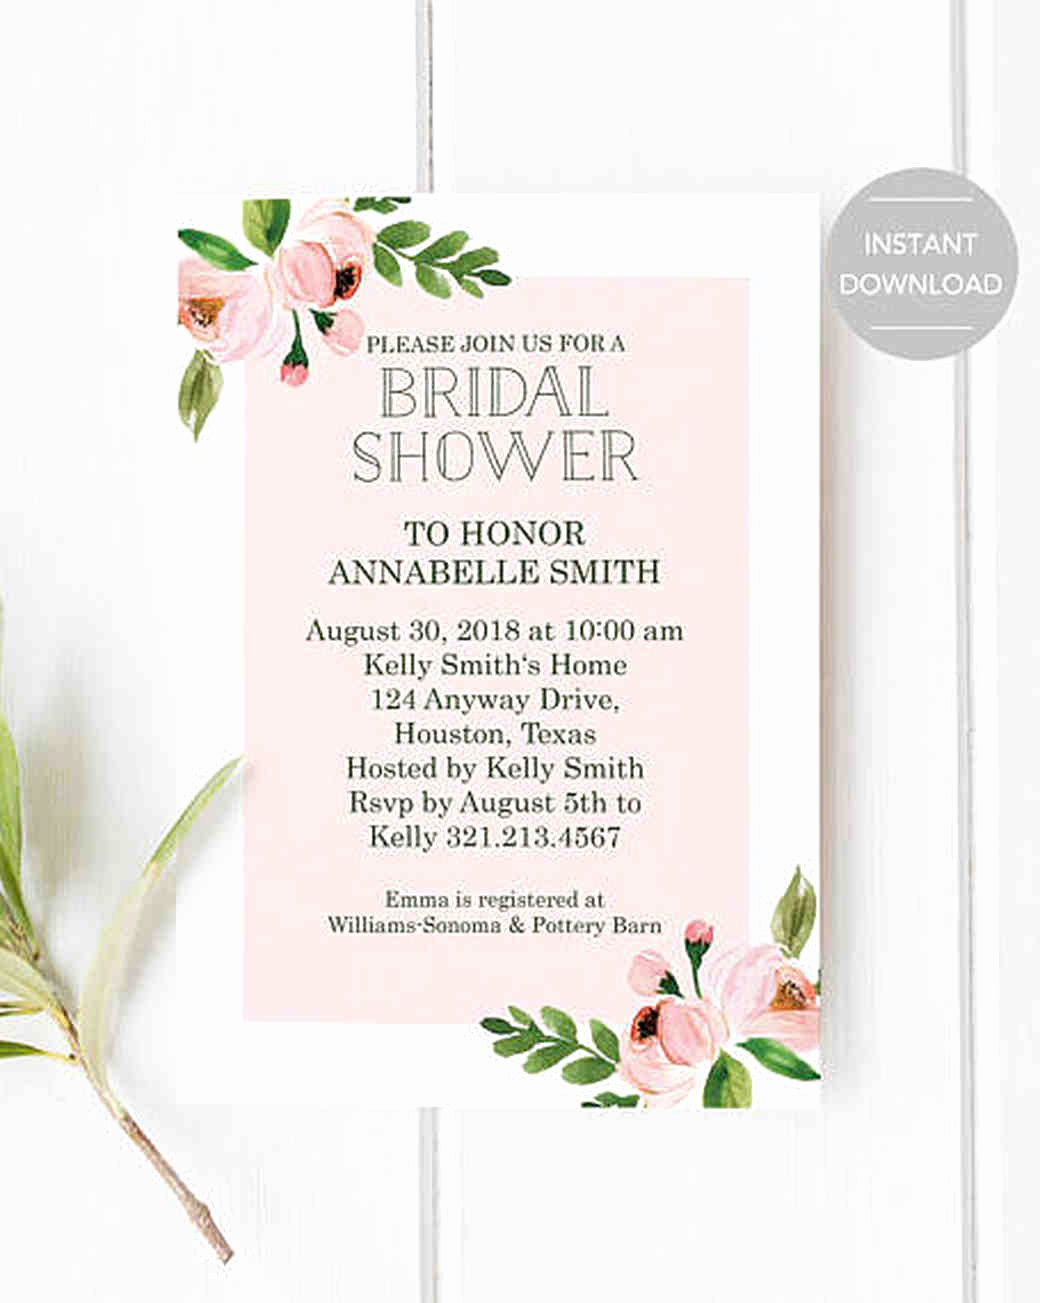 Printable Bridal Shower Invitations Beautiful 10 Affordable Bridal Shower Invitations You Can Print at